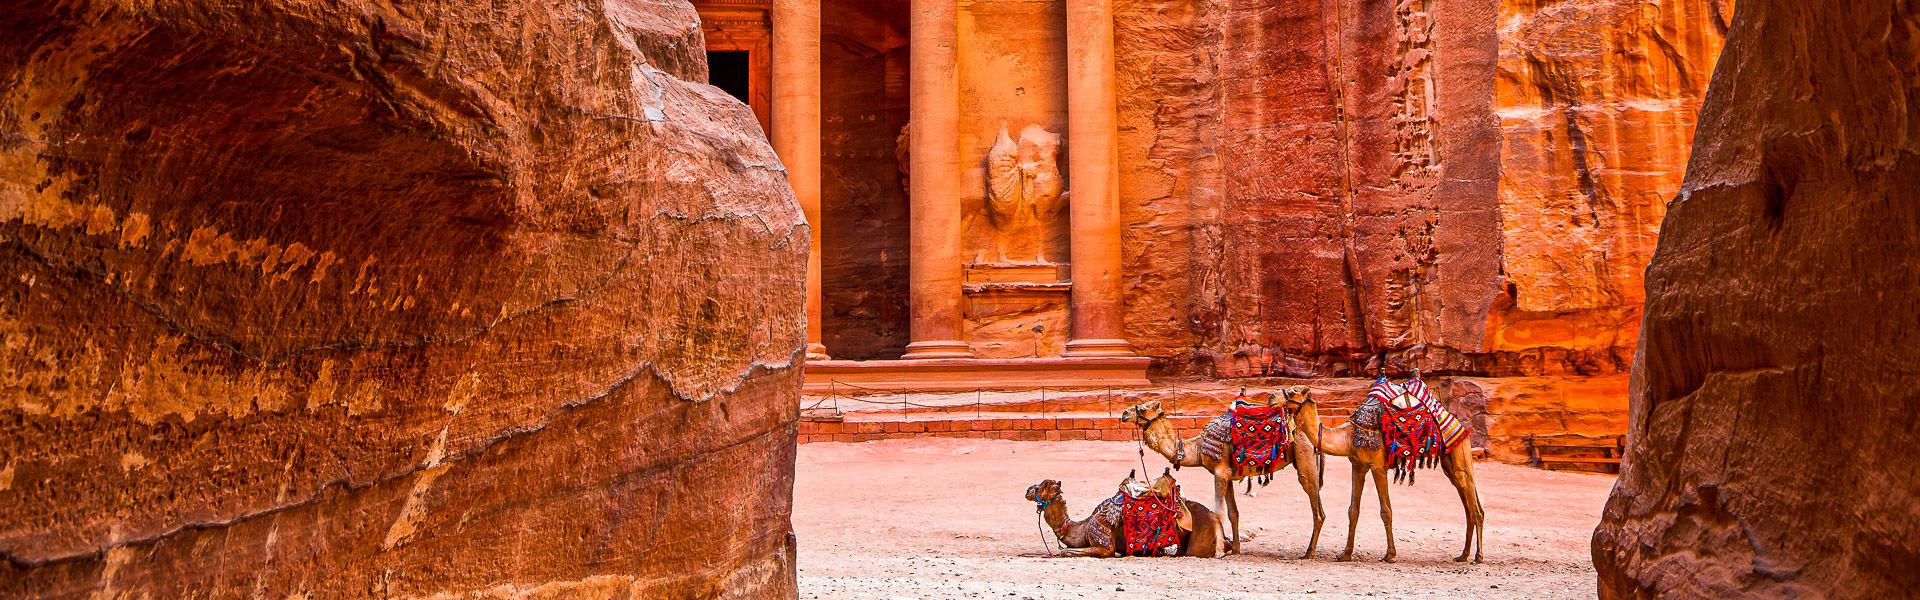 Kamele in Petra |  Kimberley Coole, Jordan Tourism Board / Chamleon